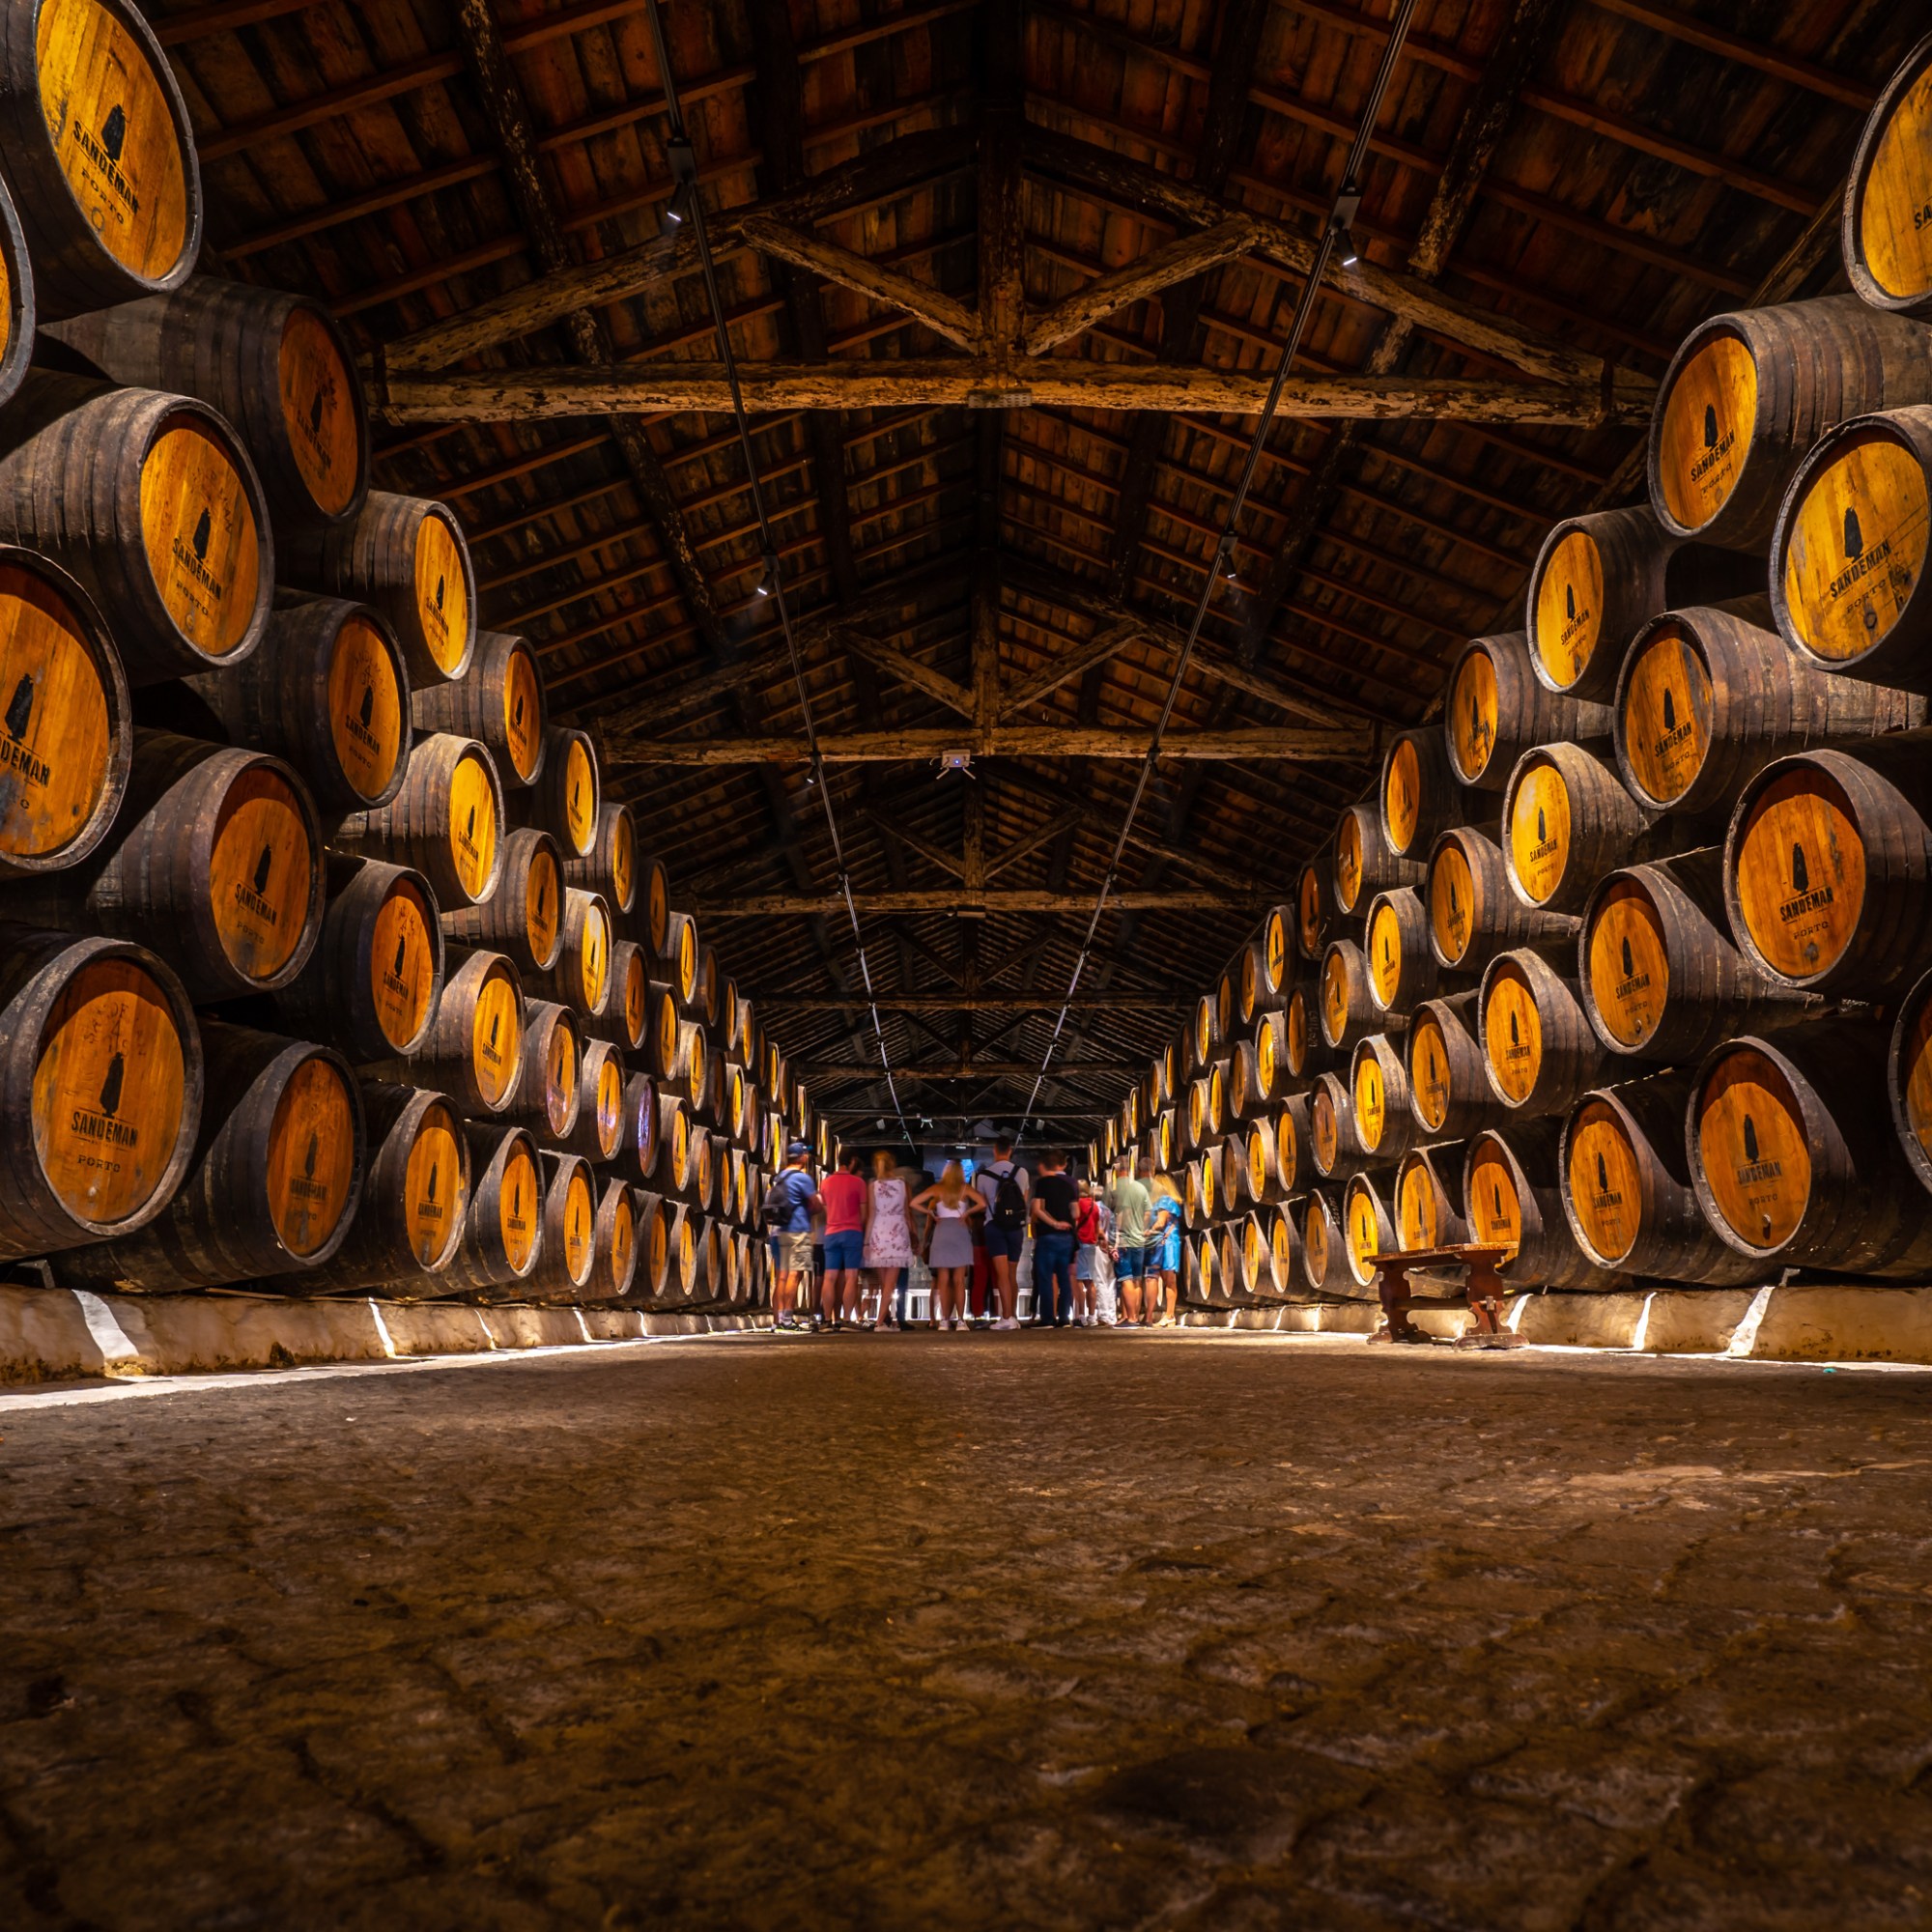 Sandeman wine cellars in Porto, Portugal.